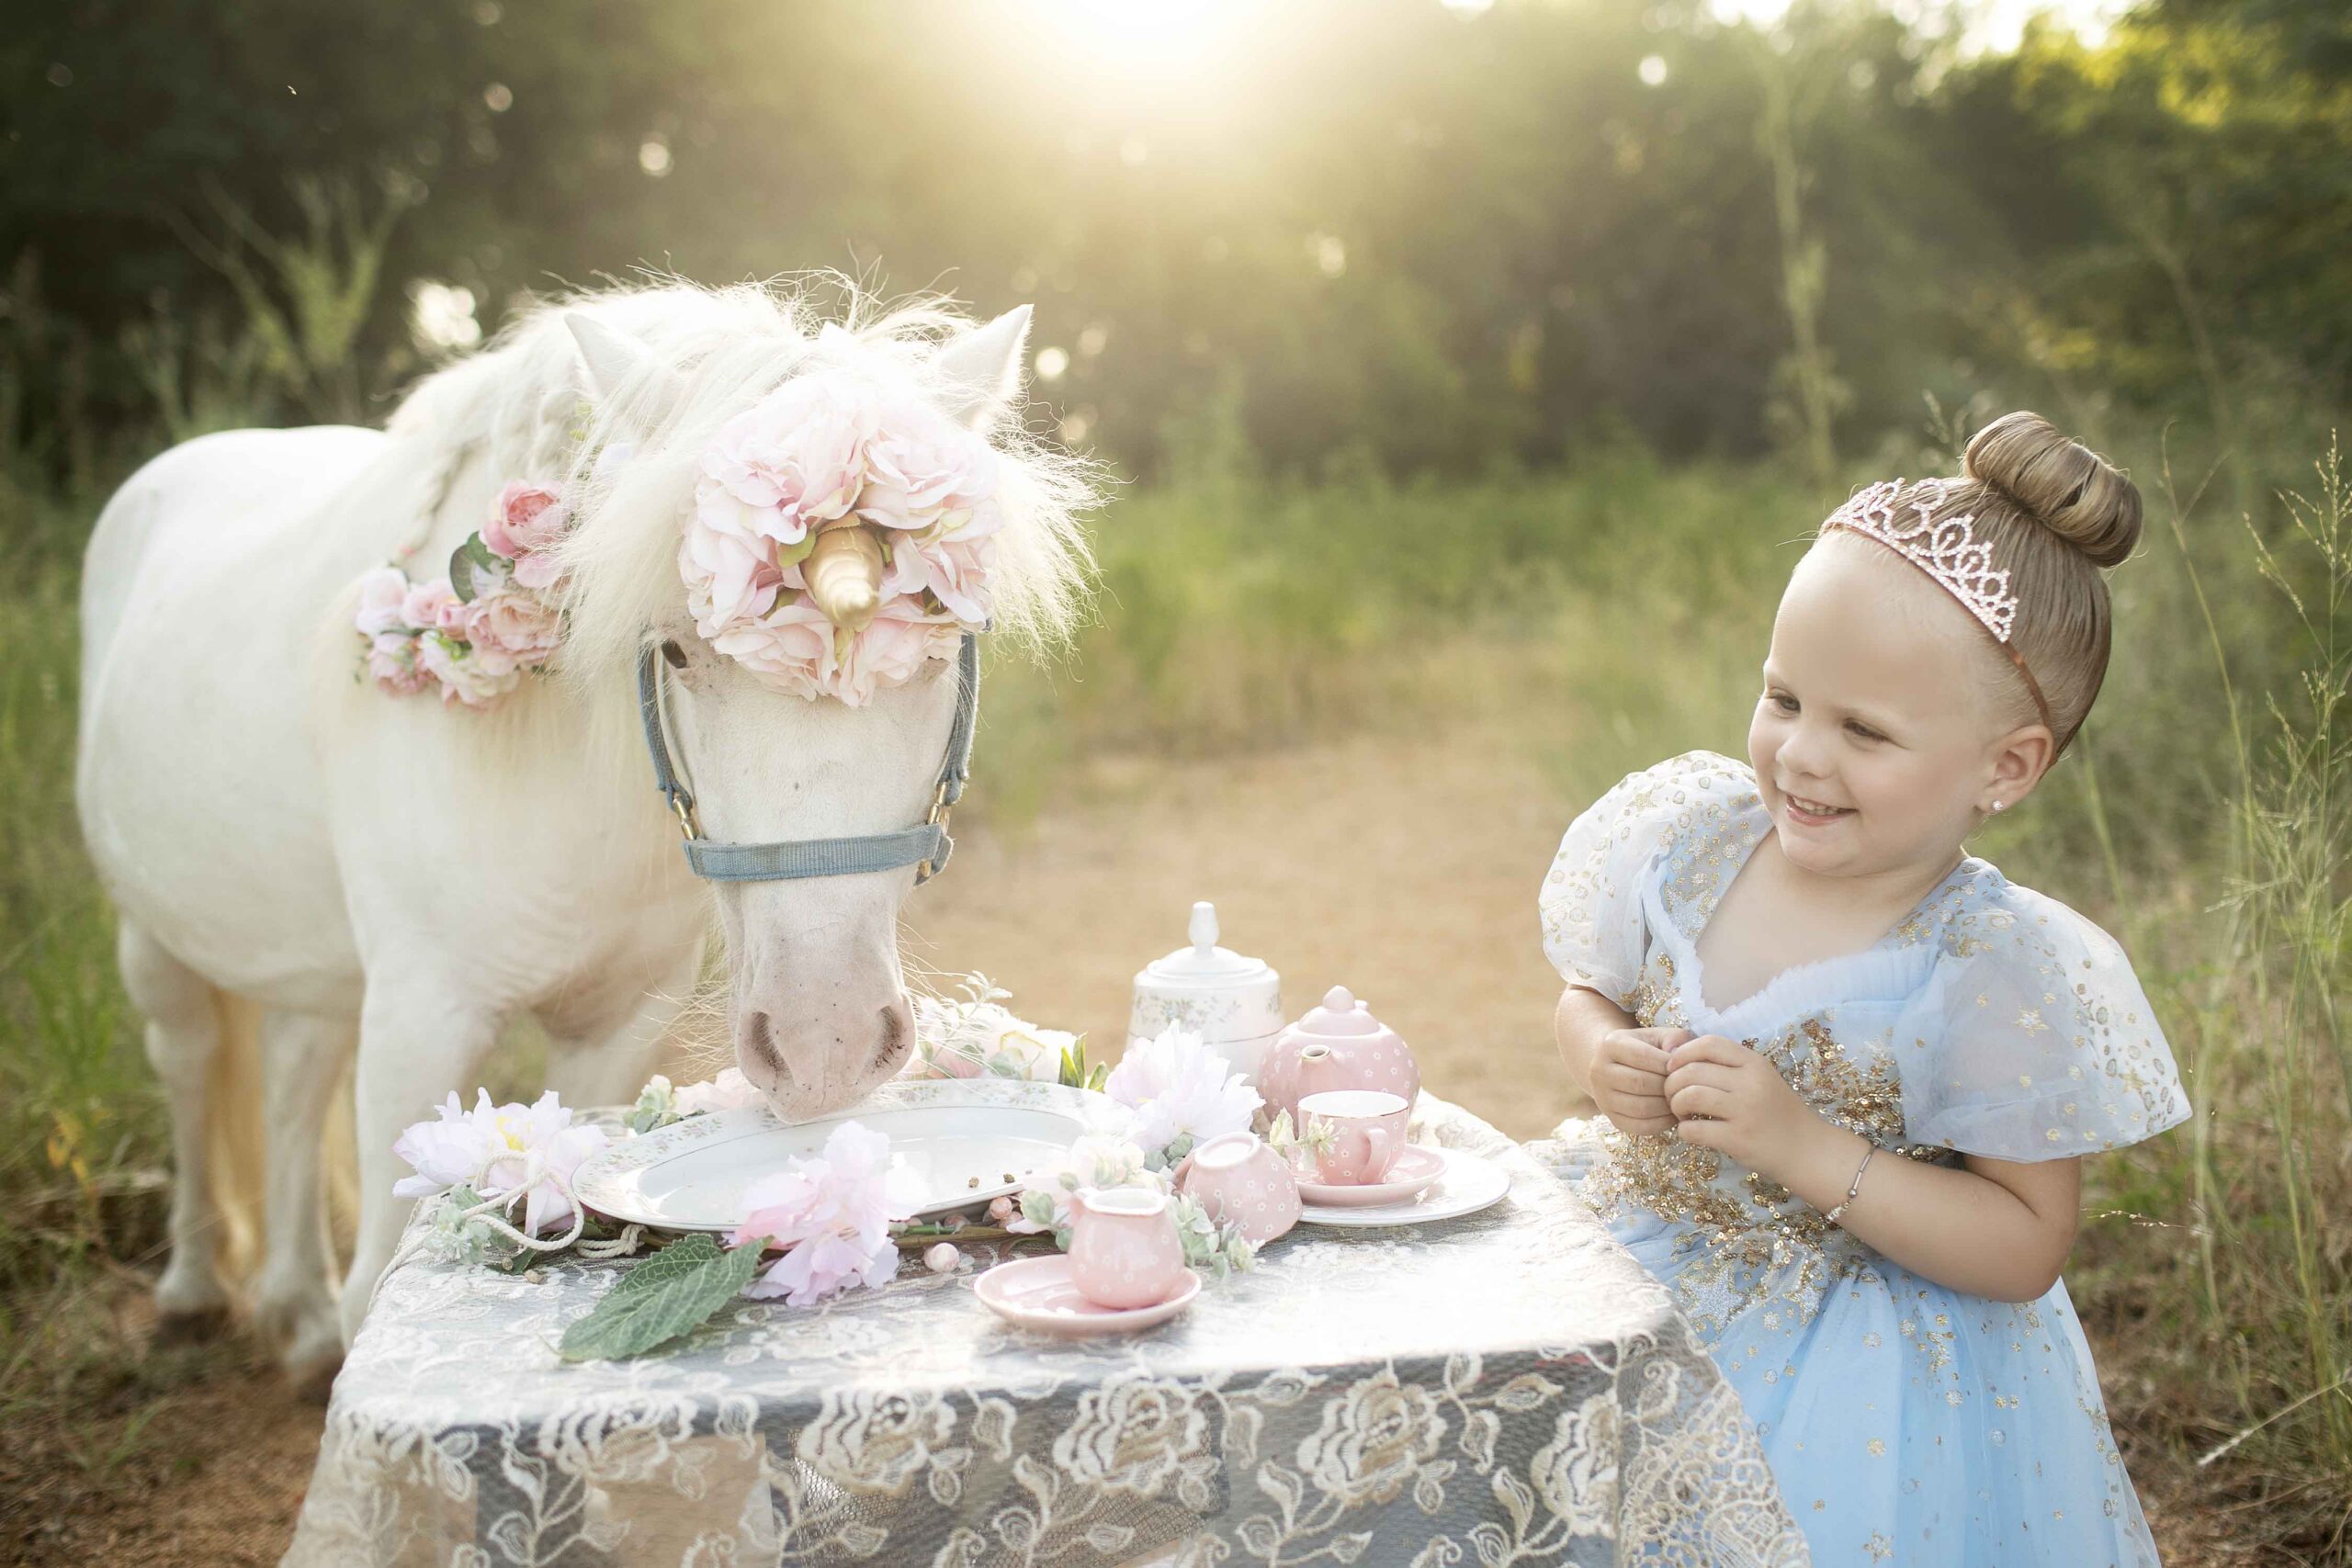 Princess Tea Party with a Unicorn